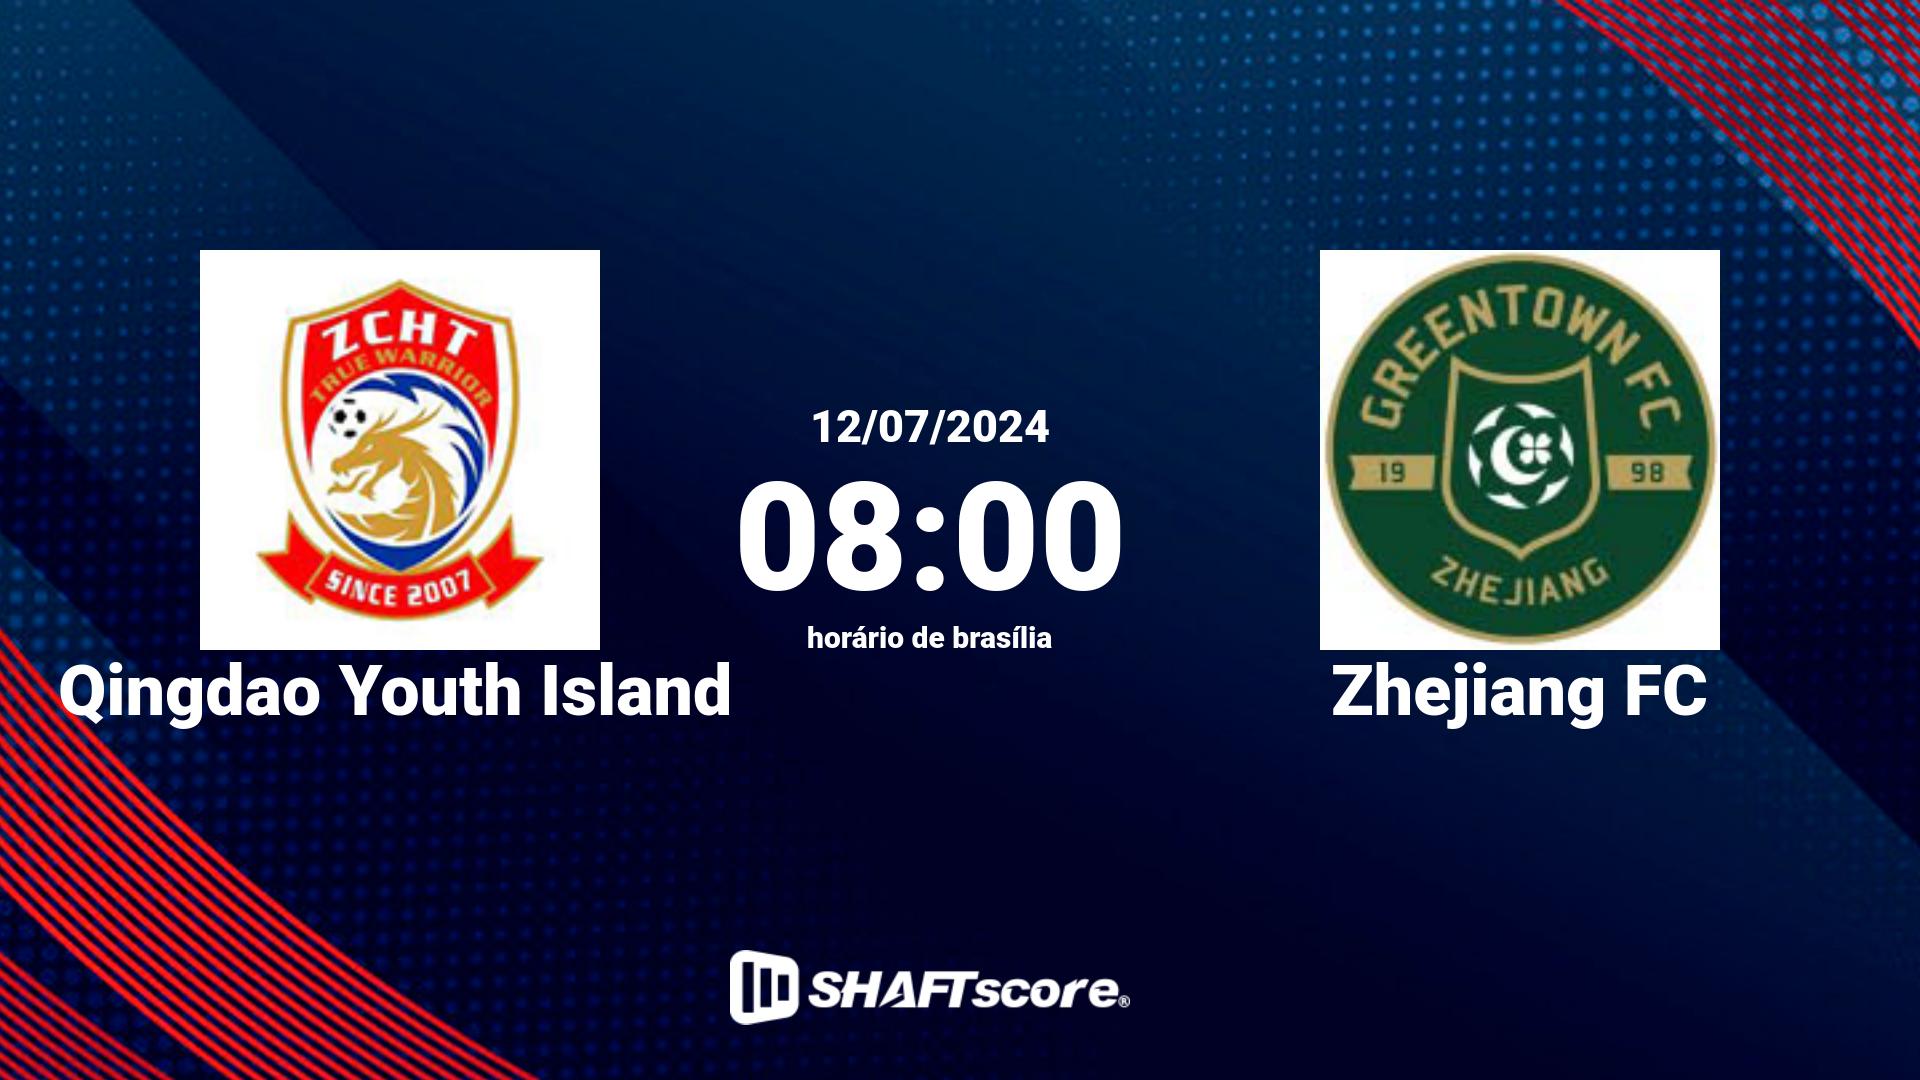 Estatísticas do jogo Qingdao Youth Island vs Zhejiang FC 12.07 08:00